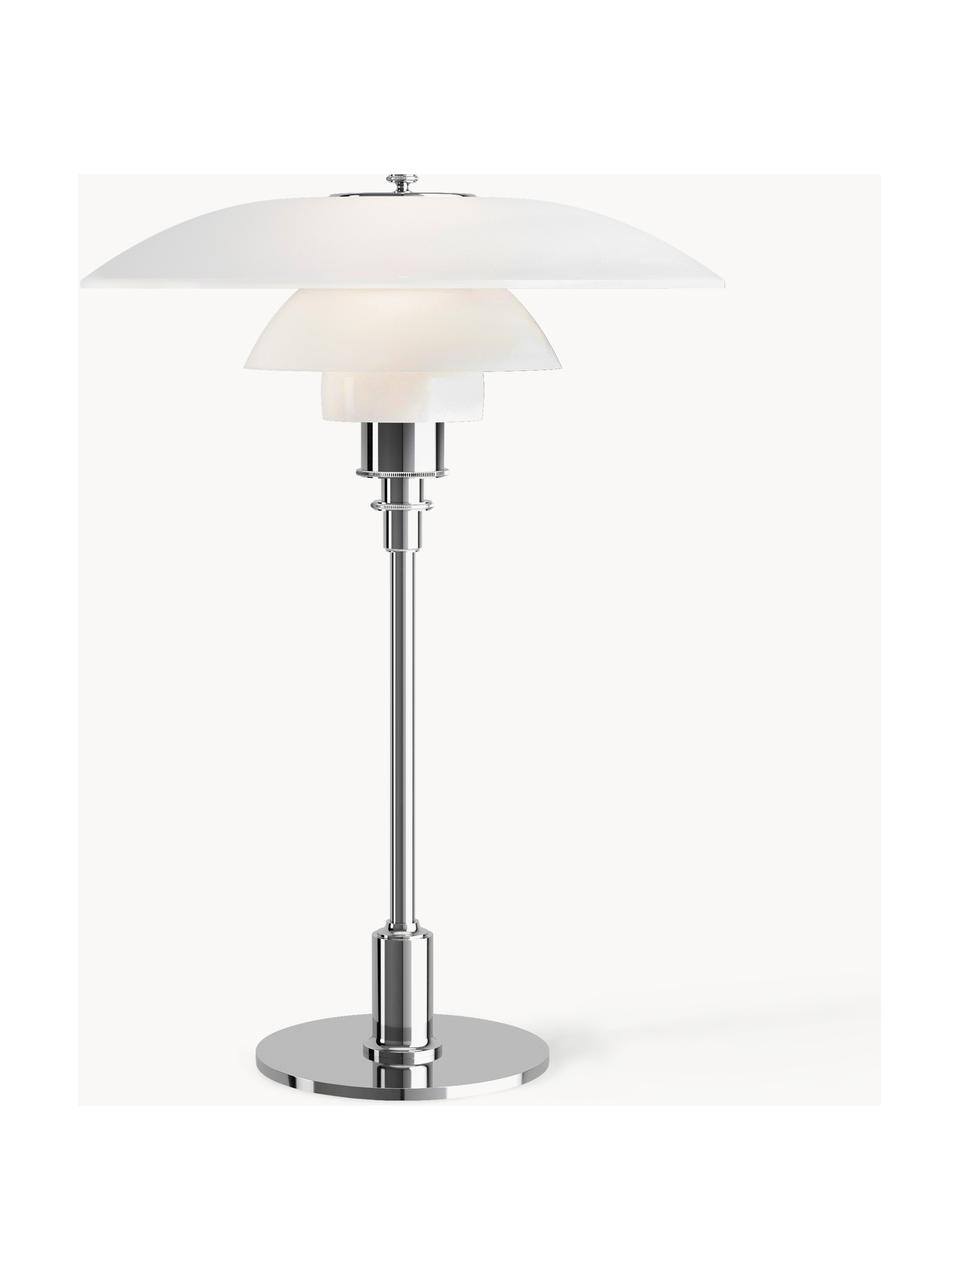 Grote tafellamp PH 3½-2½, mondgeblazen, Lampenkap: opaalglas, mondgeblazen, Zilverkleurig, wit, Ø 33 x H 47 cm